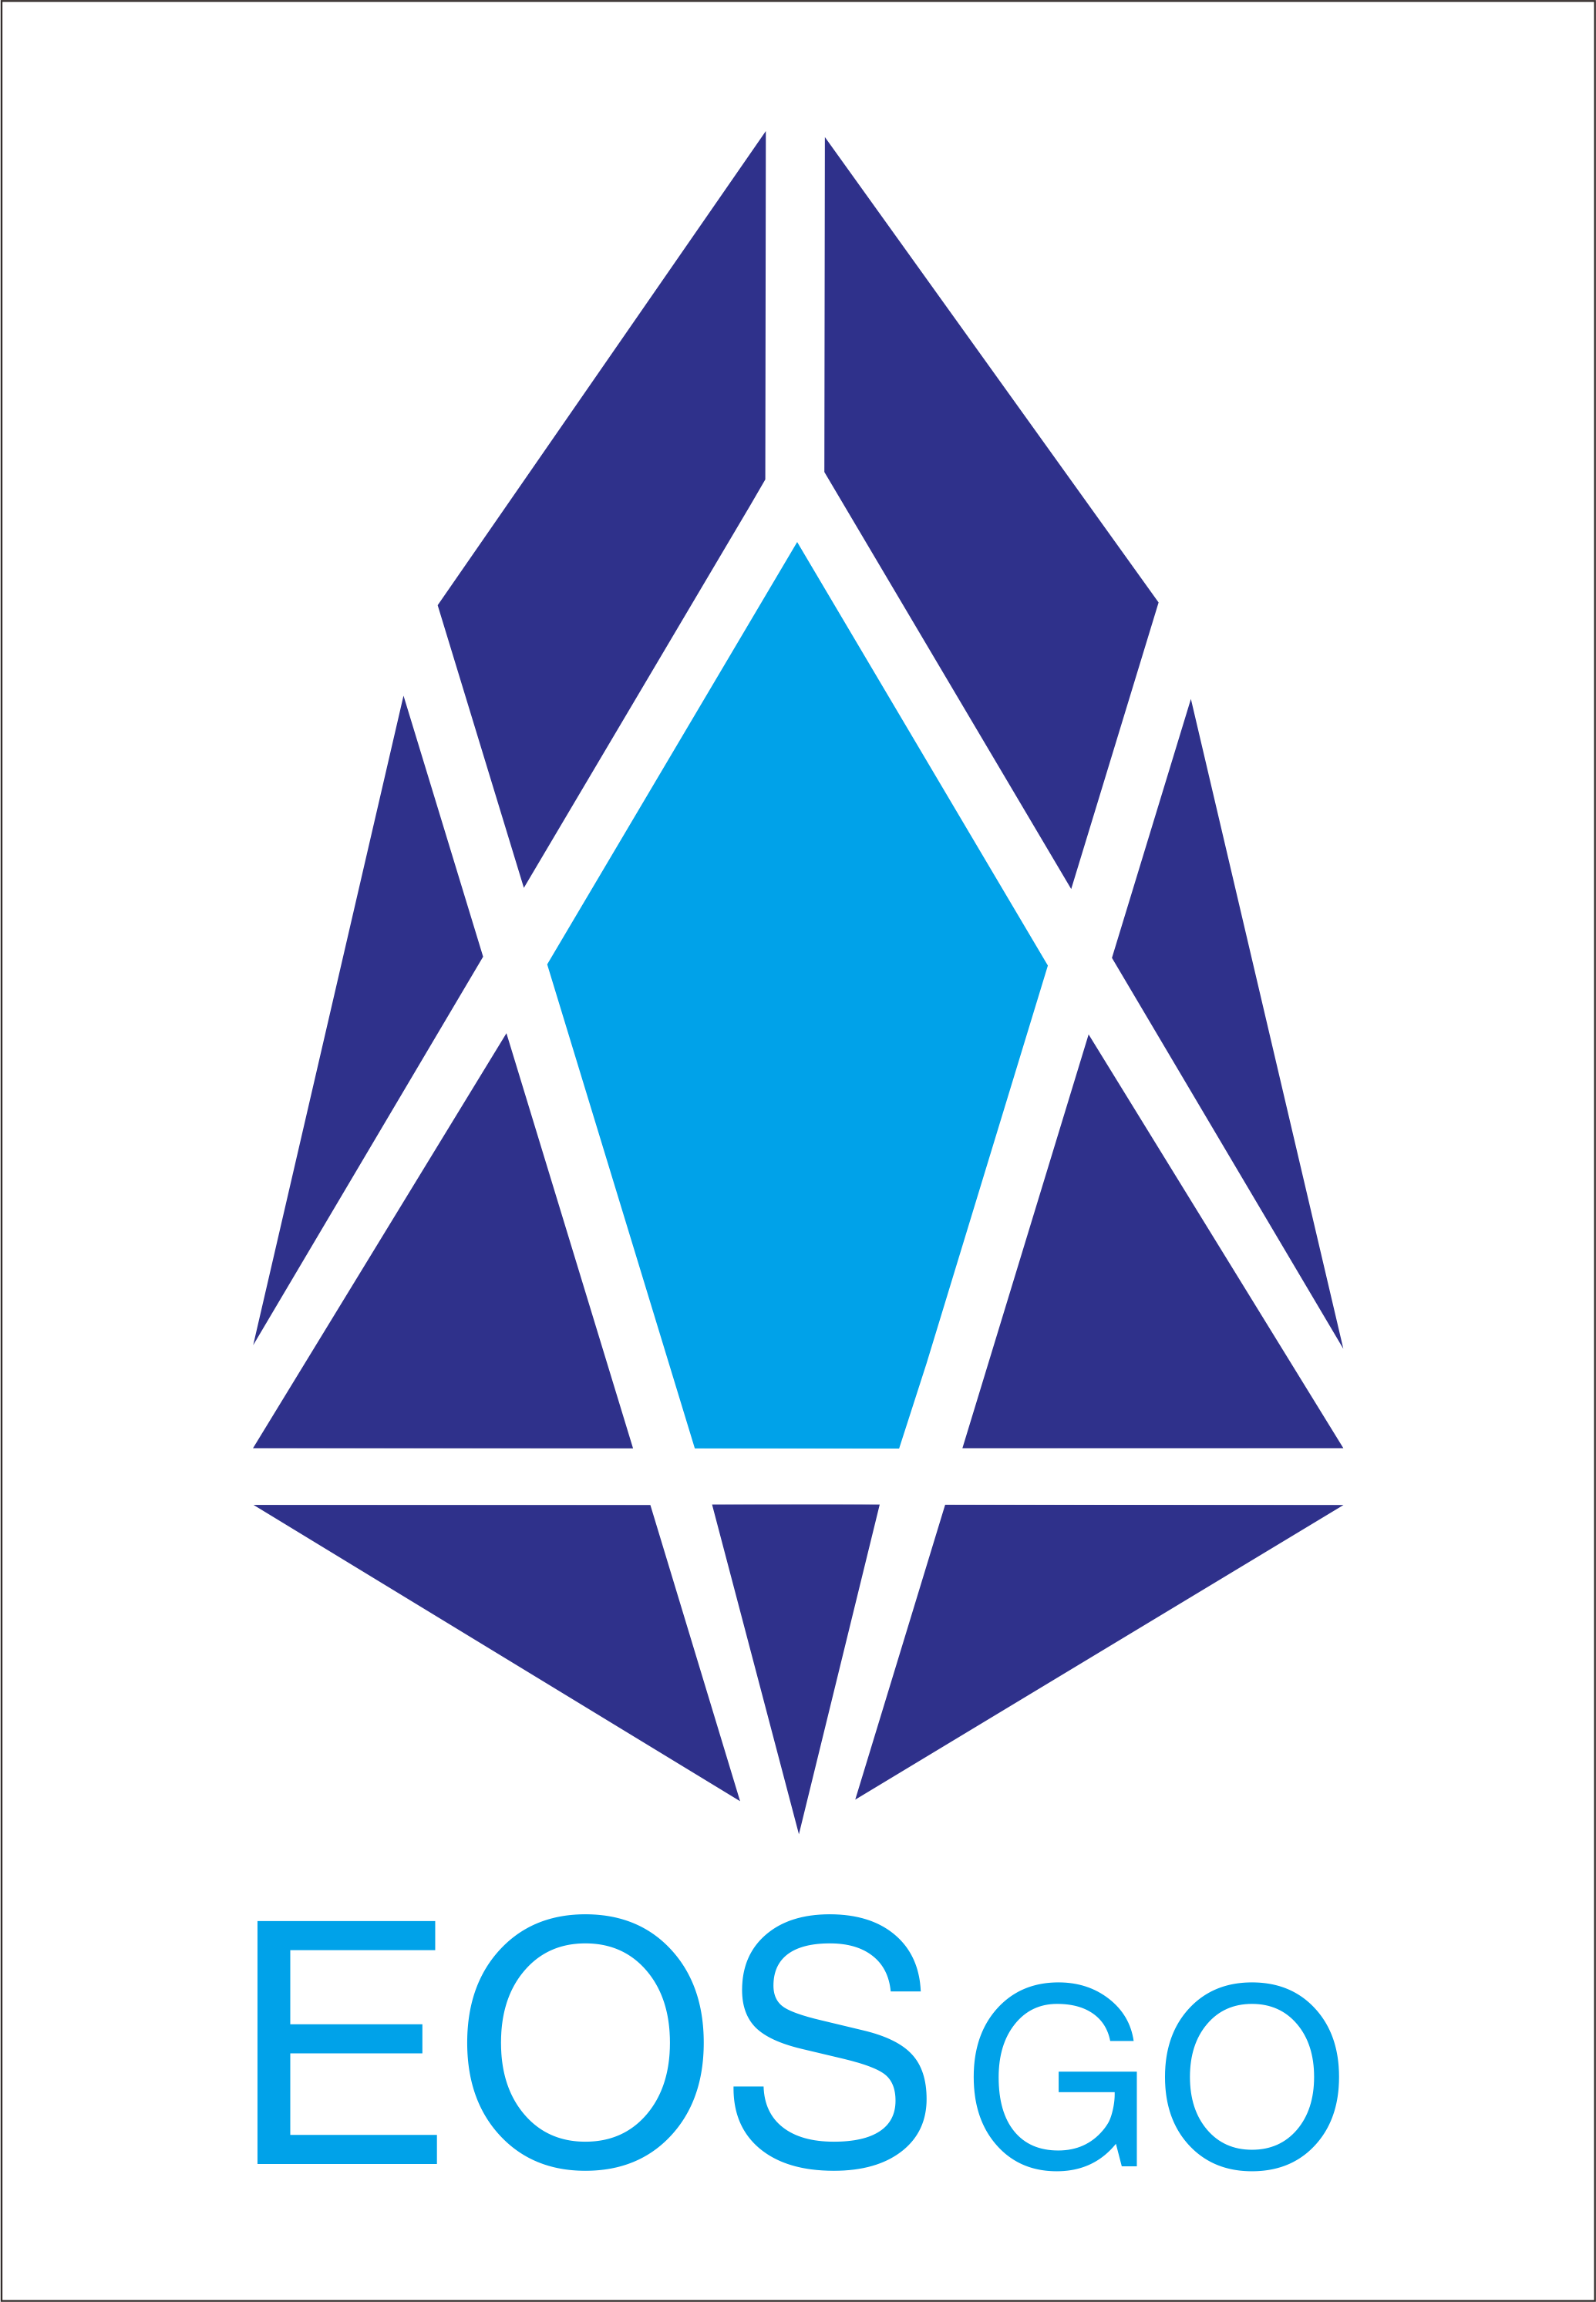 Logo EOS #4.png